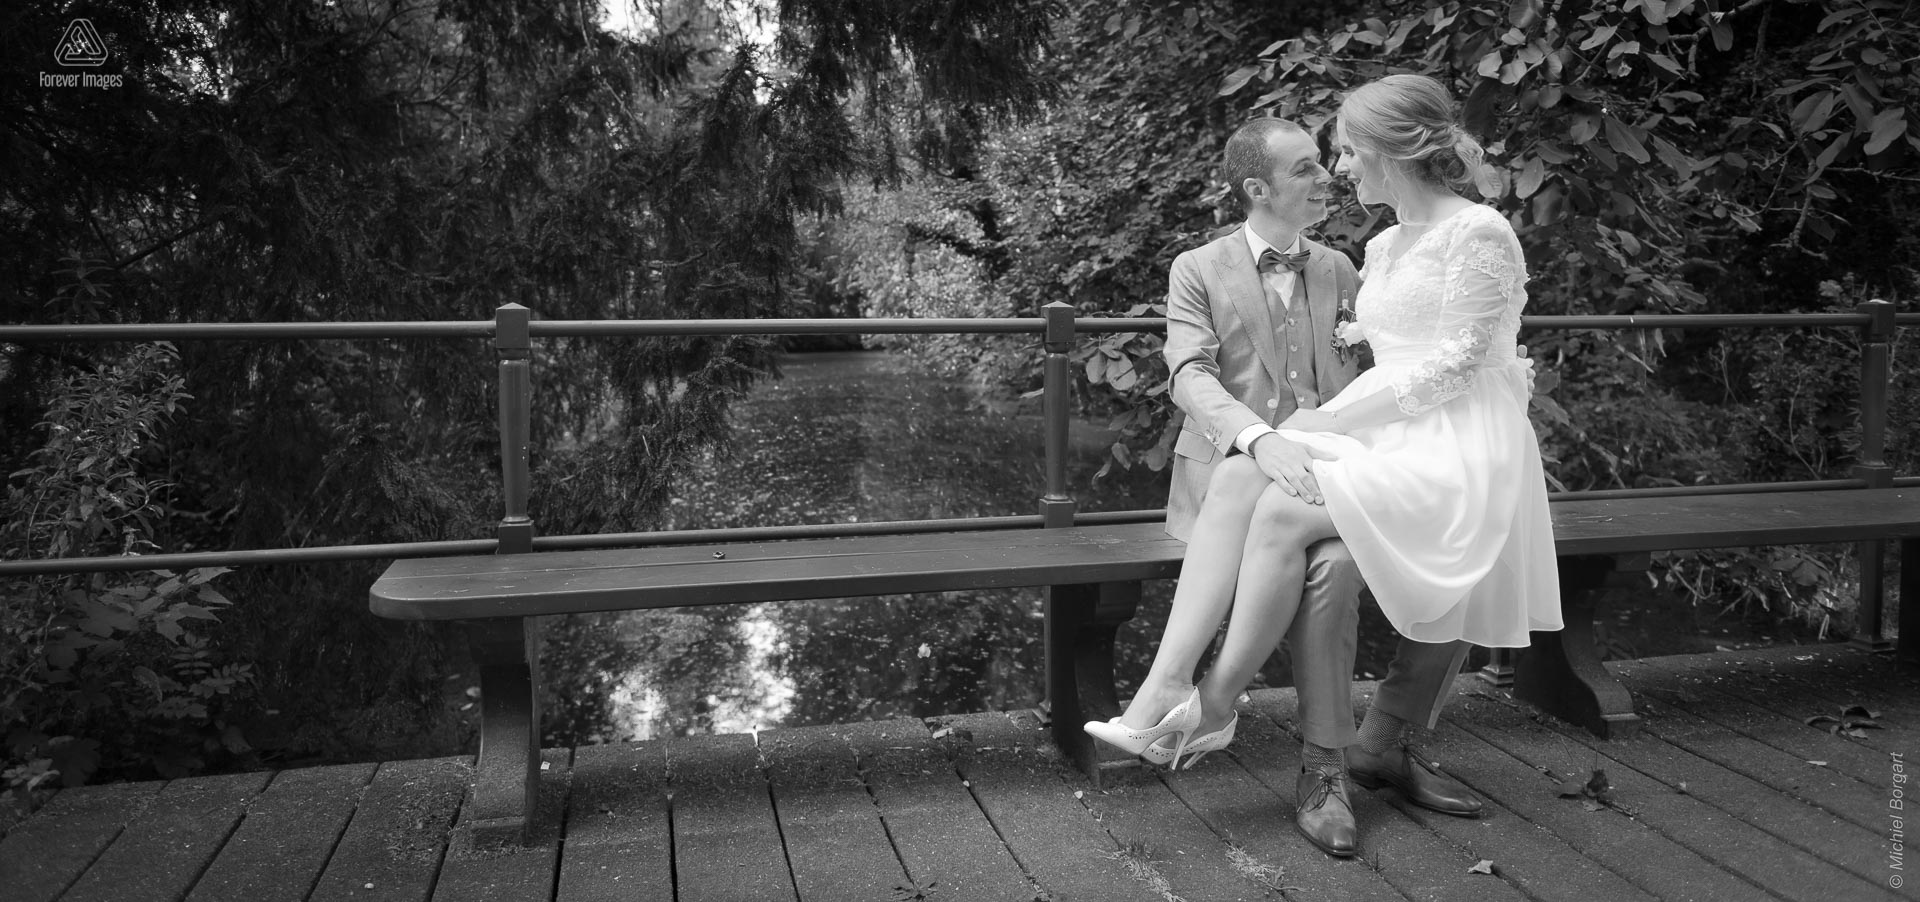 Bridal photo black and white B&W bride sits garden of Huize Frankendael Amsterdam | Bart Eefje | Wedding Photographer Michiel Borgart - Forever Images.